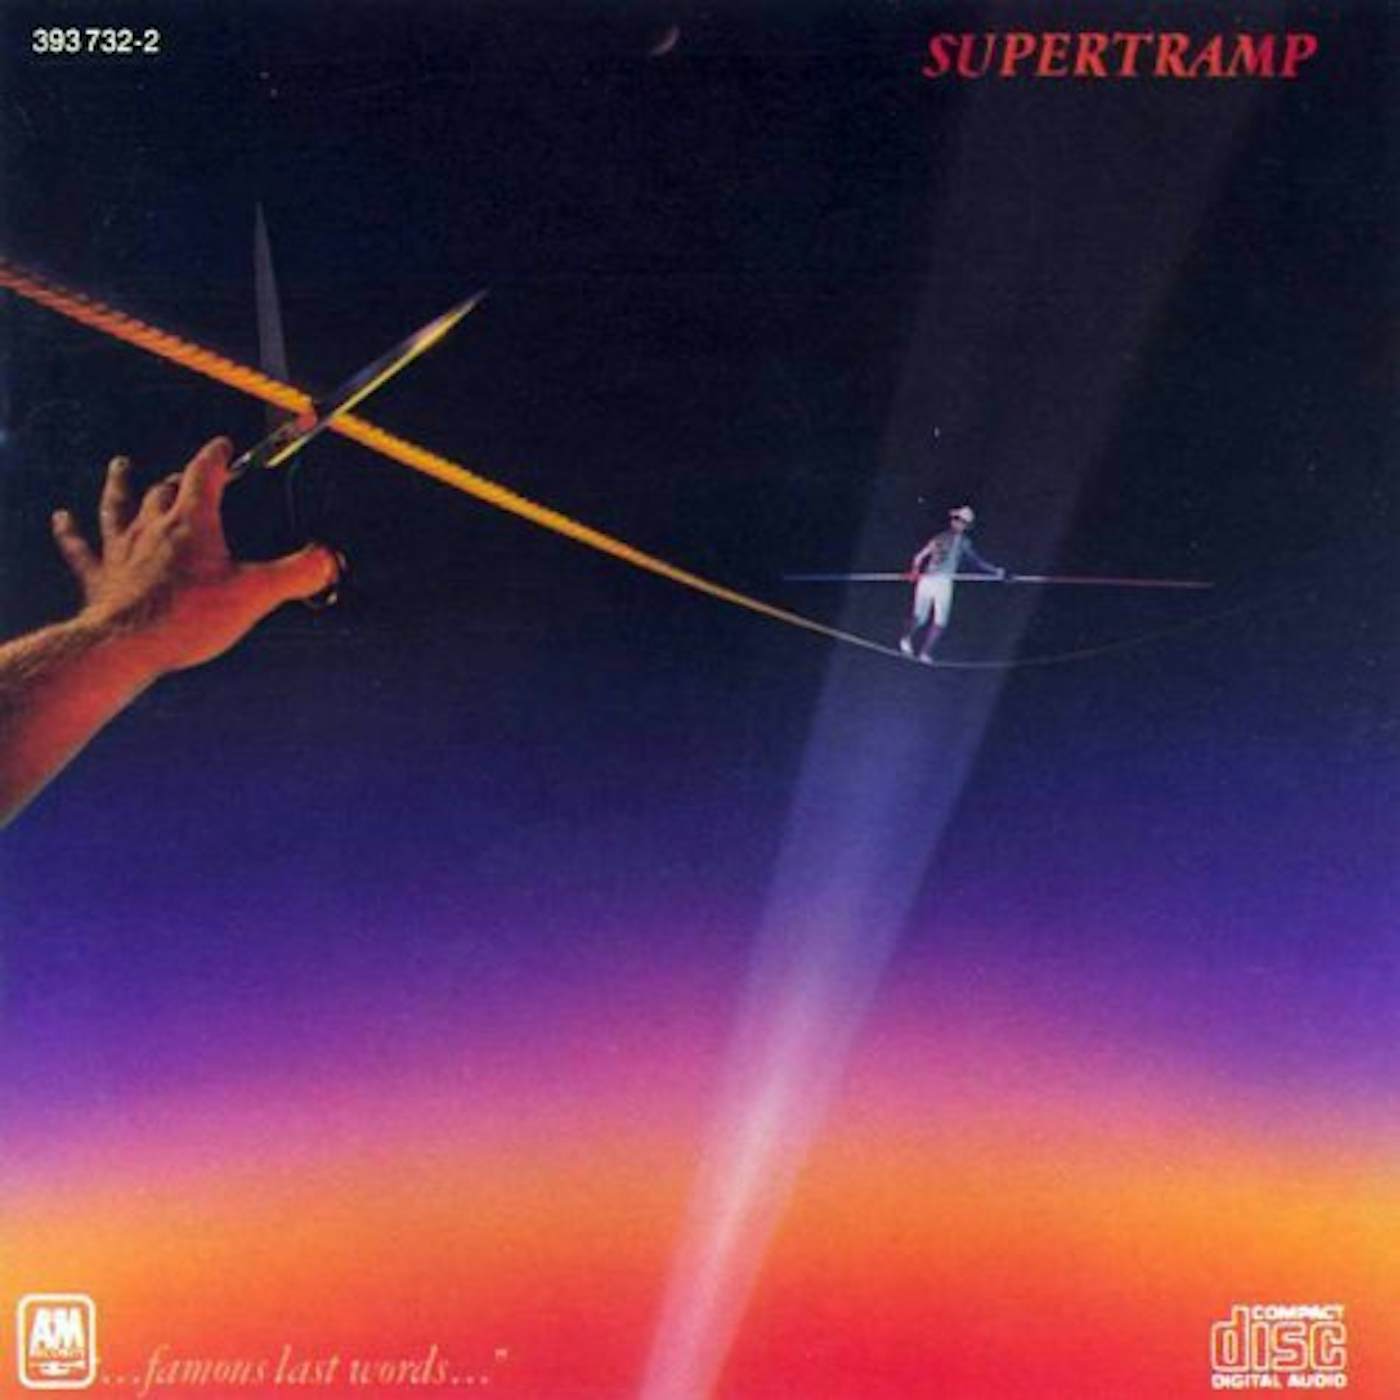 Supertramp FAMOUS LAST WORDS CD